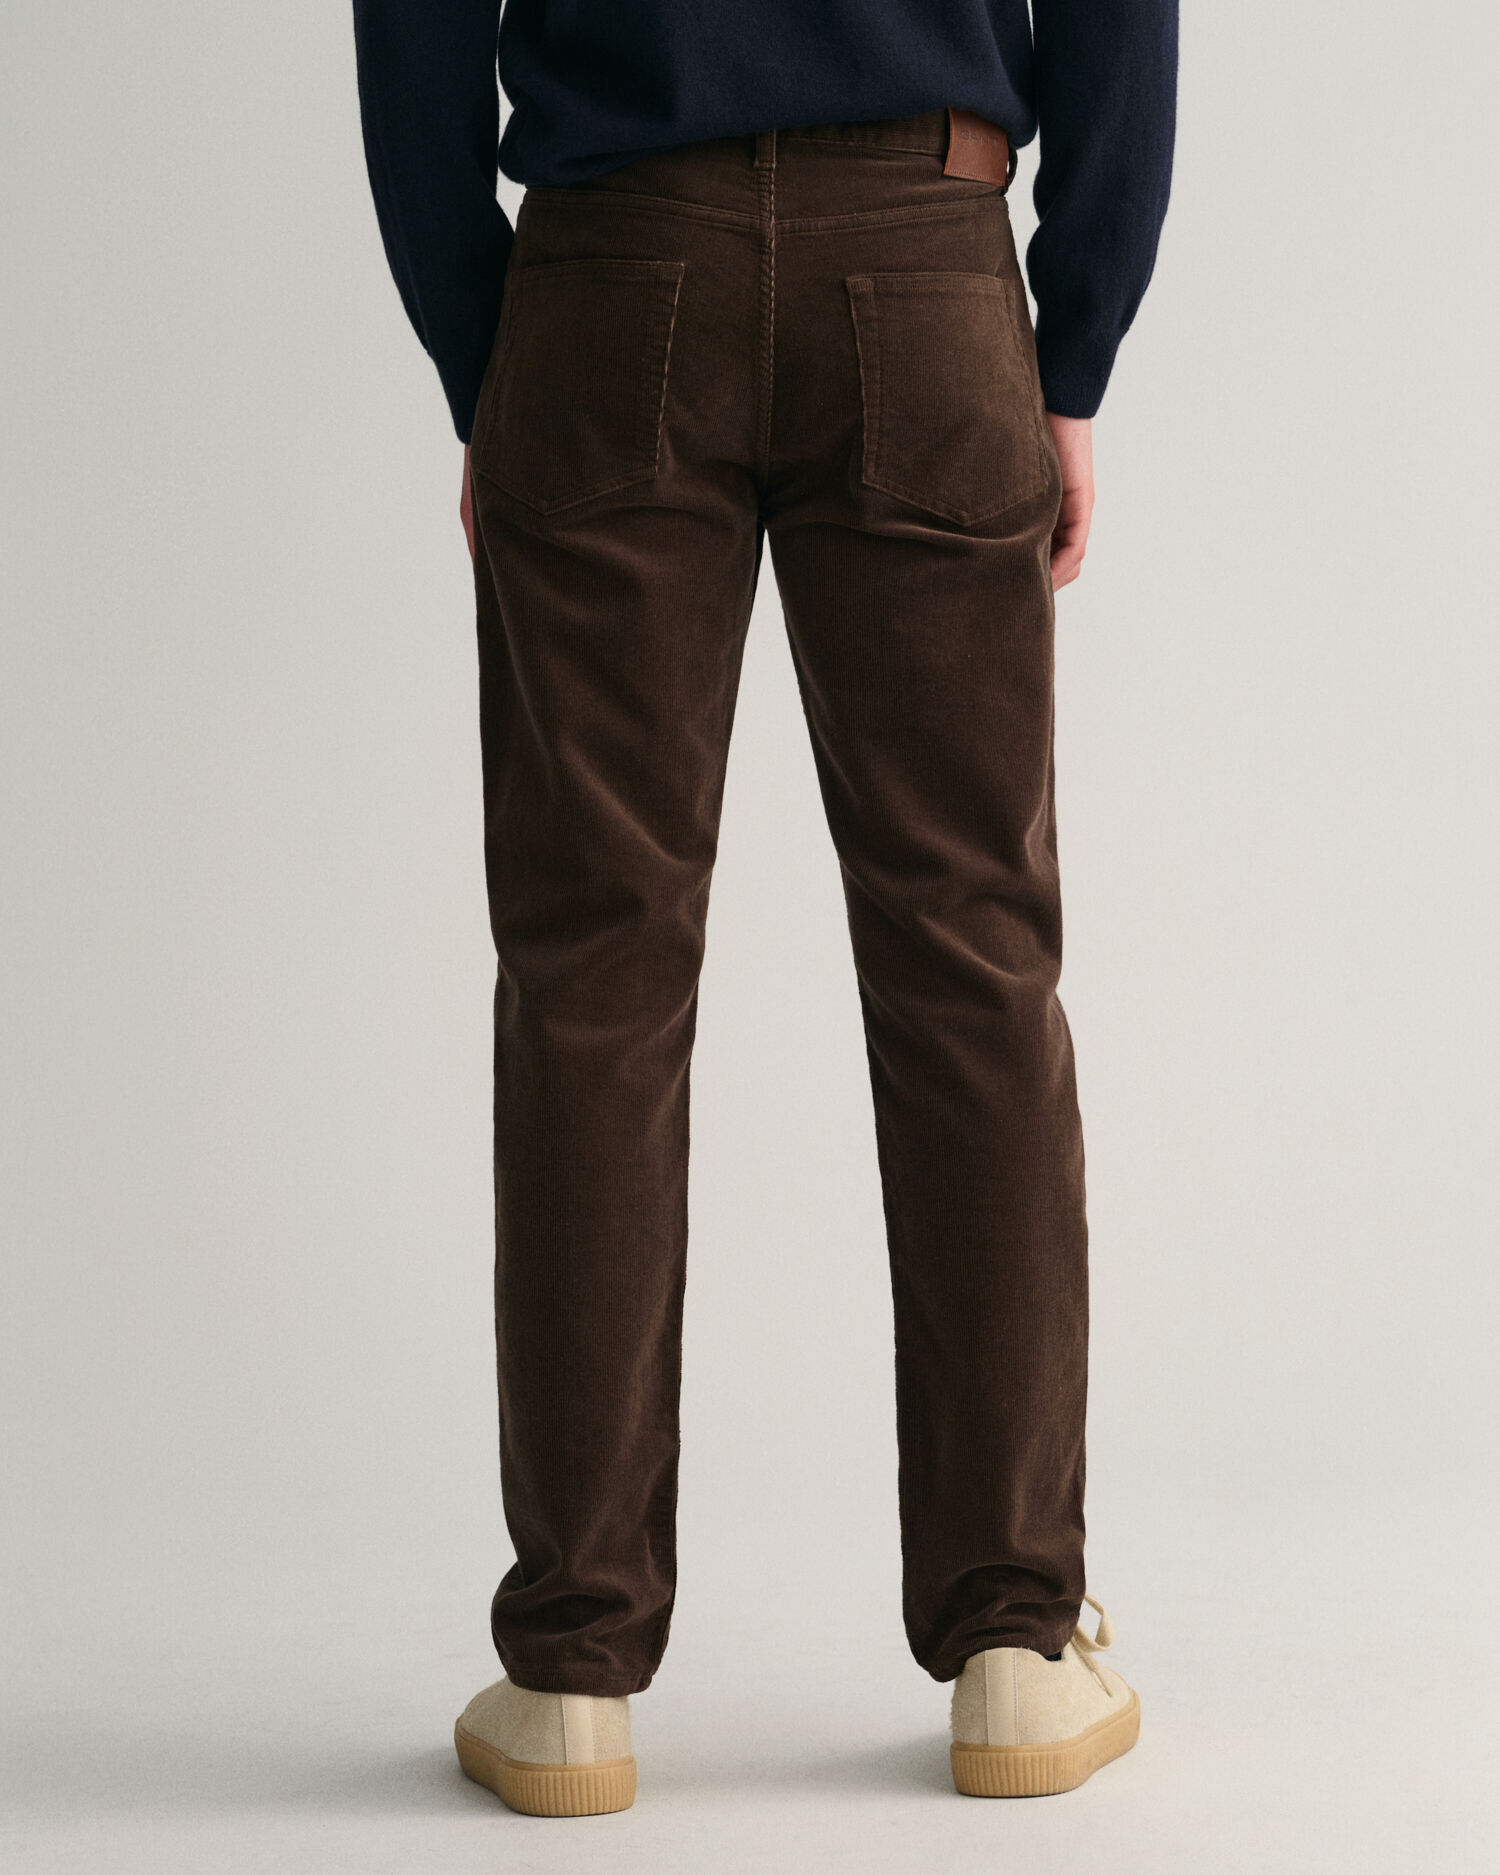 Maison Margiela Slim Fit Stretch Cotton Corduroy Trousers, $885 | MR PORTER  | Lookastic